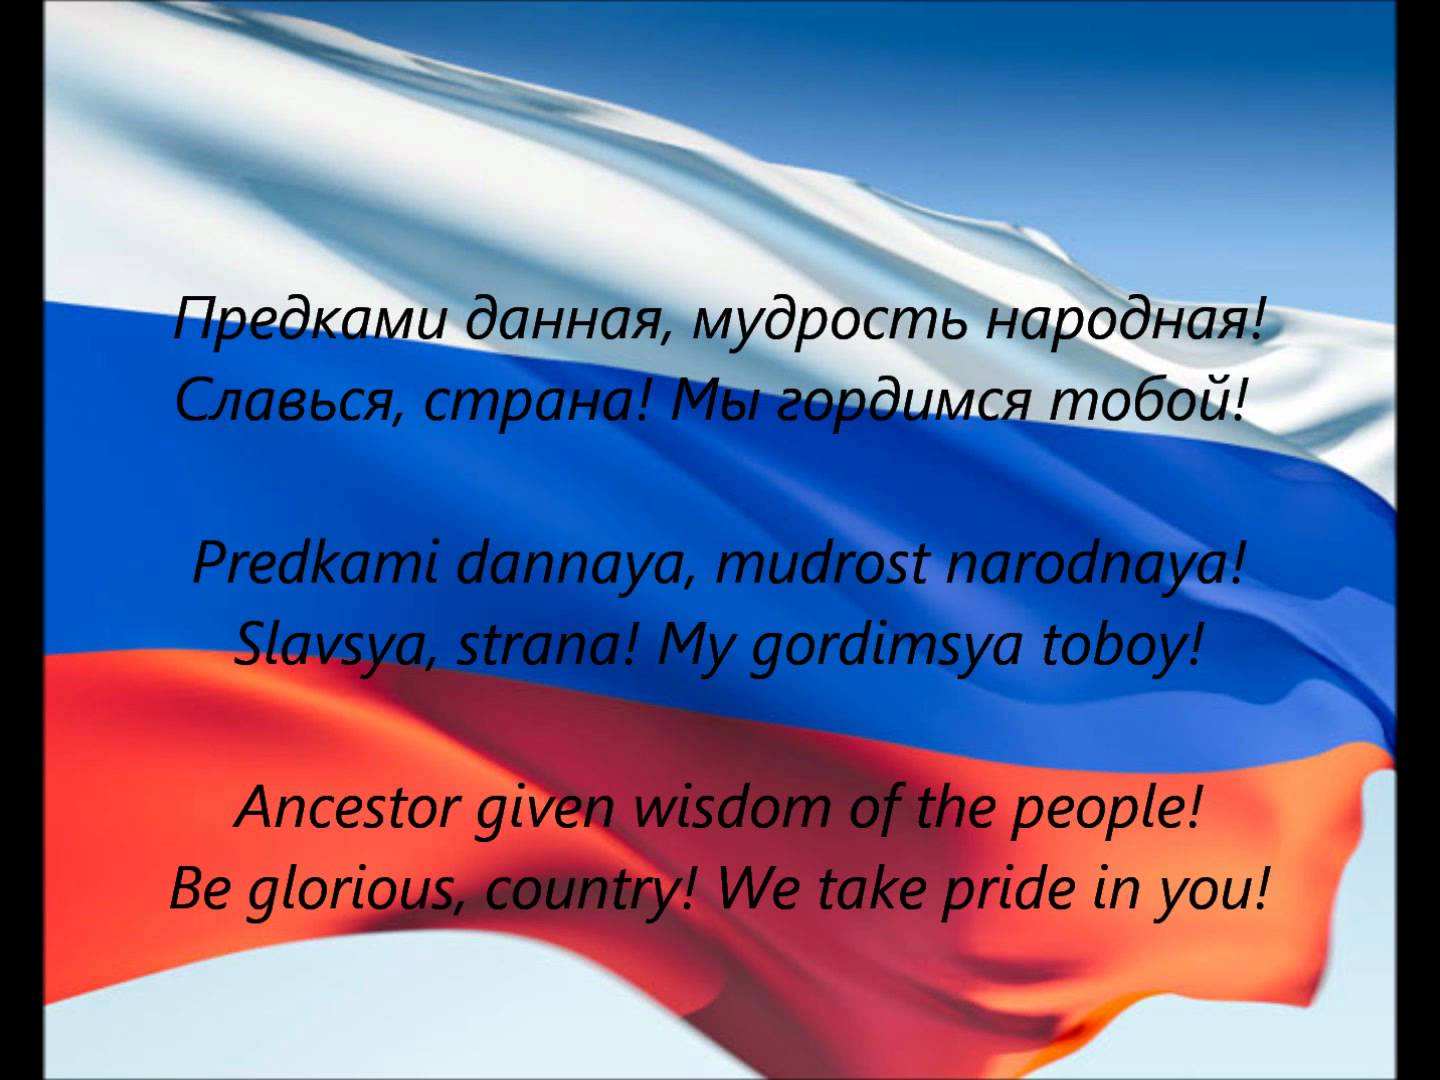 National Anthem of Russia with English Lyrics